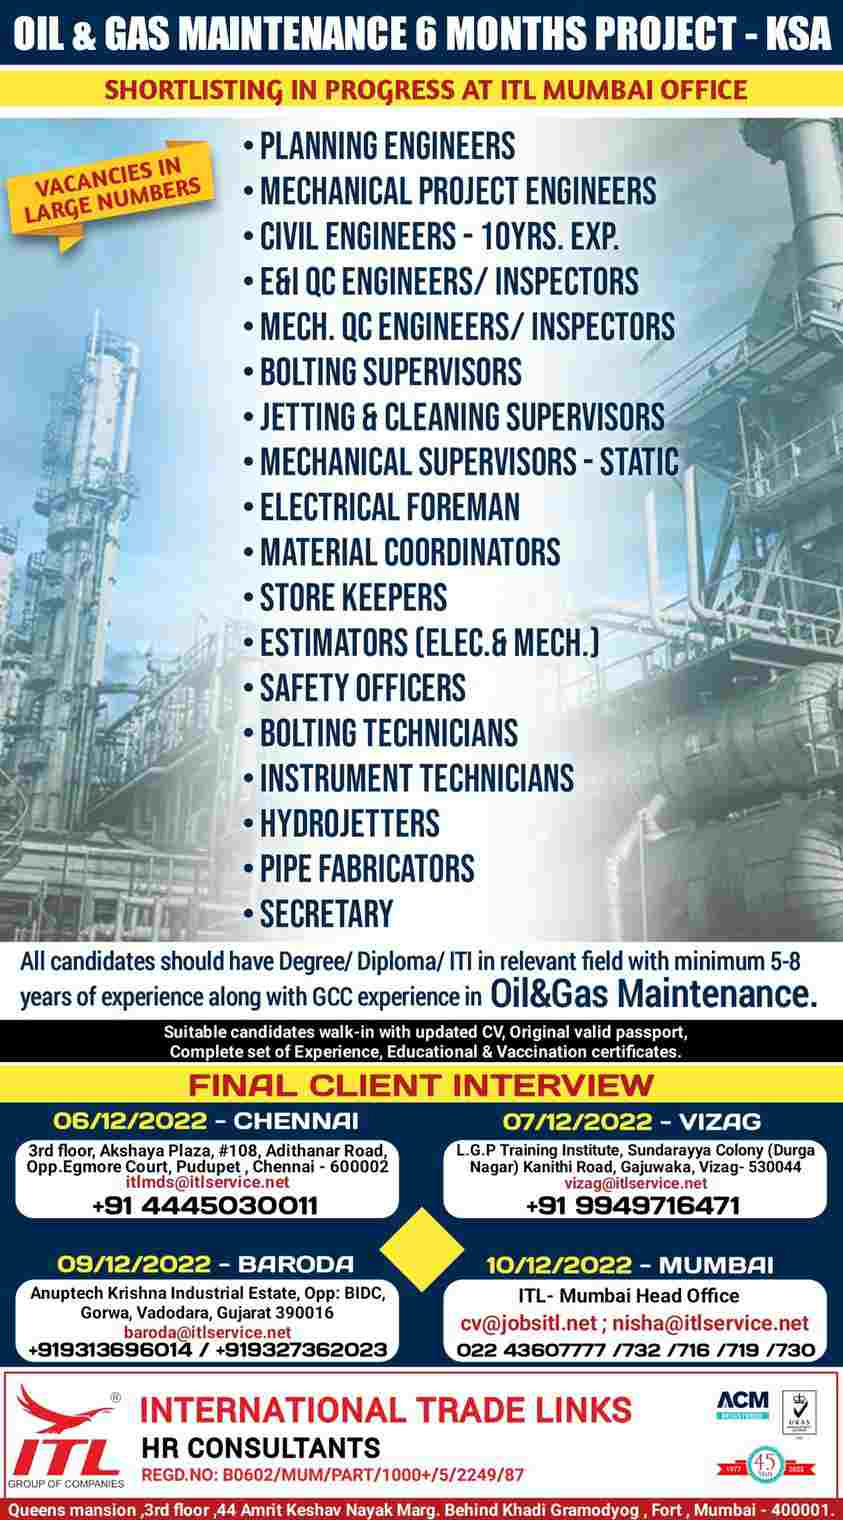 Gulf Recruitment Oil & Gas Maintenance project in Saudi